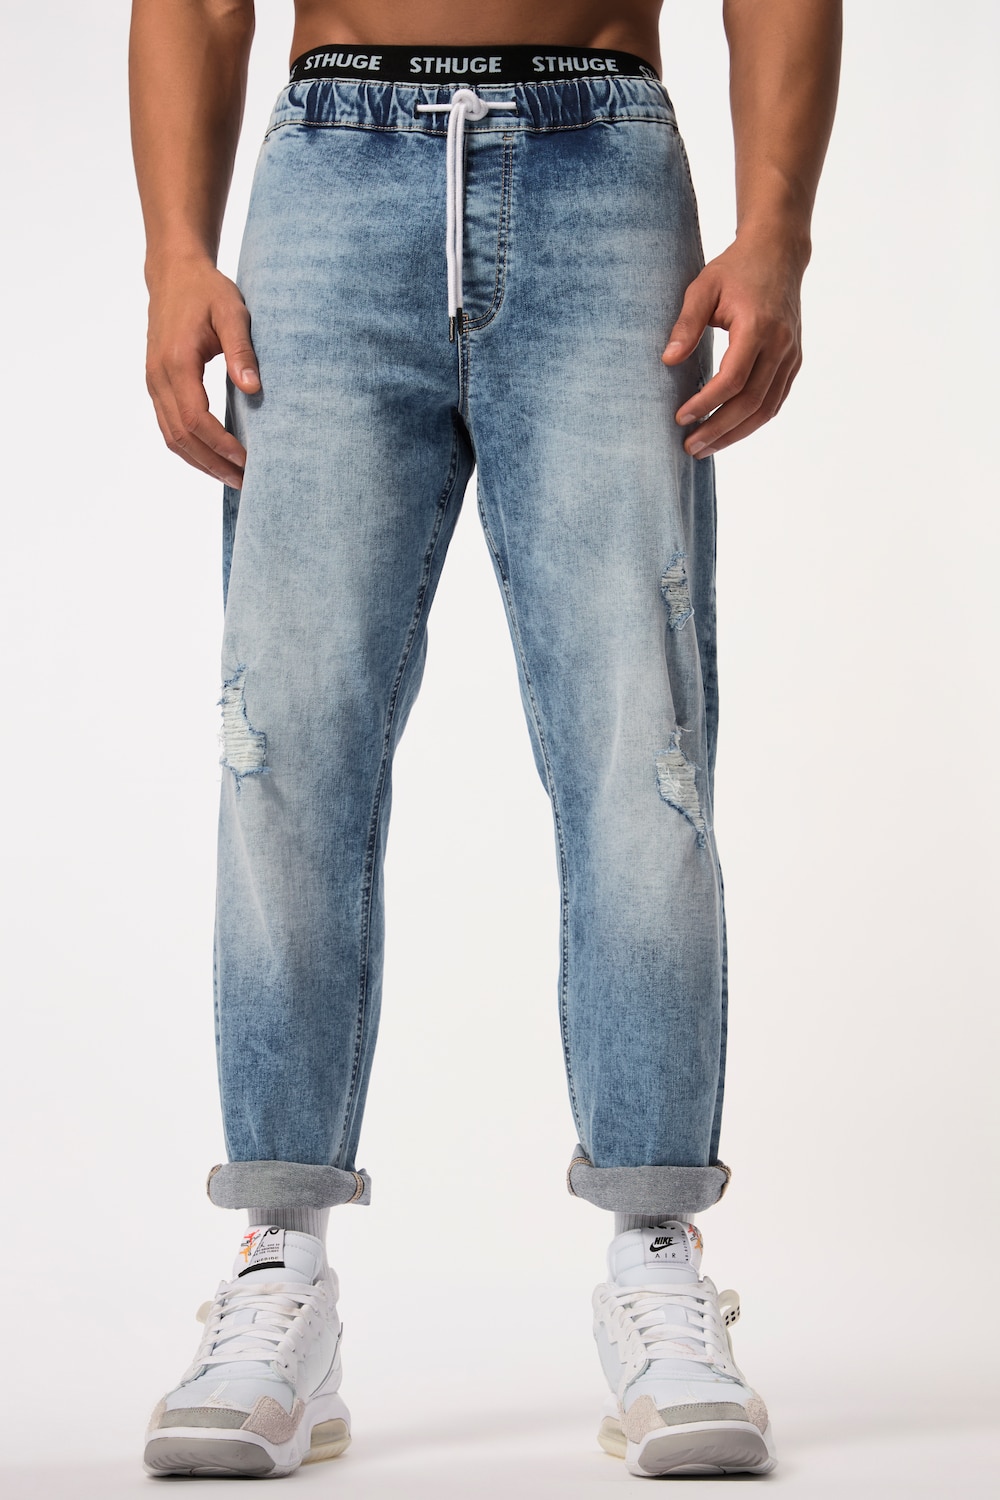 Grote Maten STHUGE jeans FLEXLASTIC®male, blauw, Maat: 3XL, Katoen, STHUGE